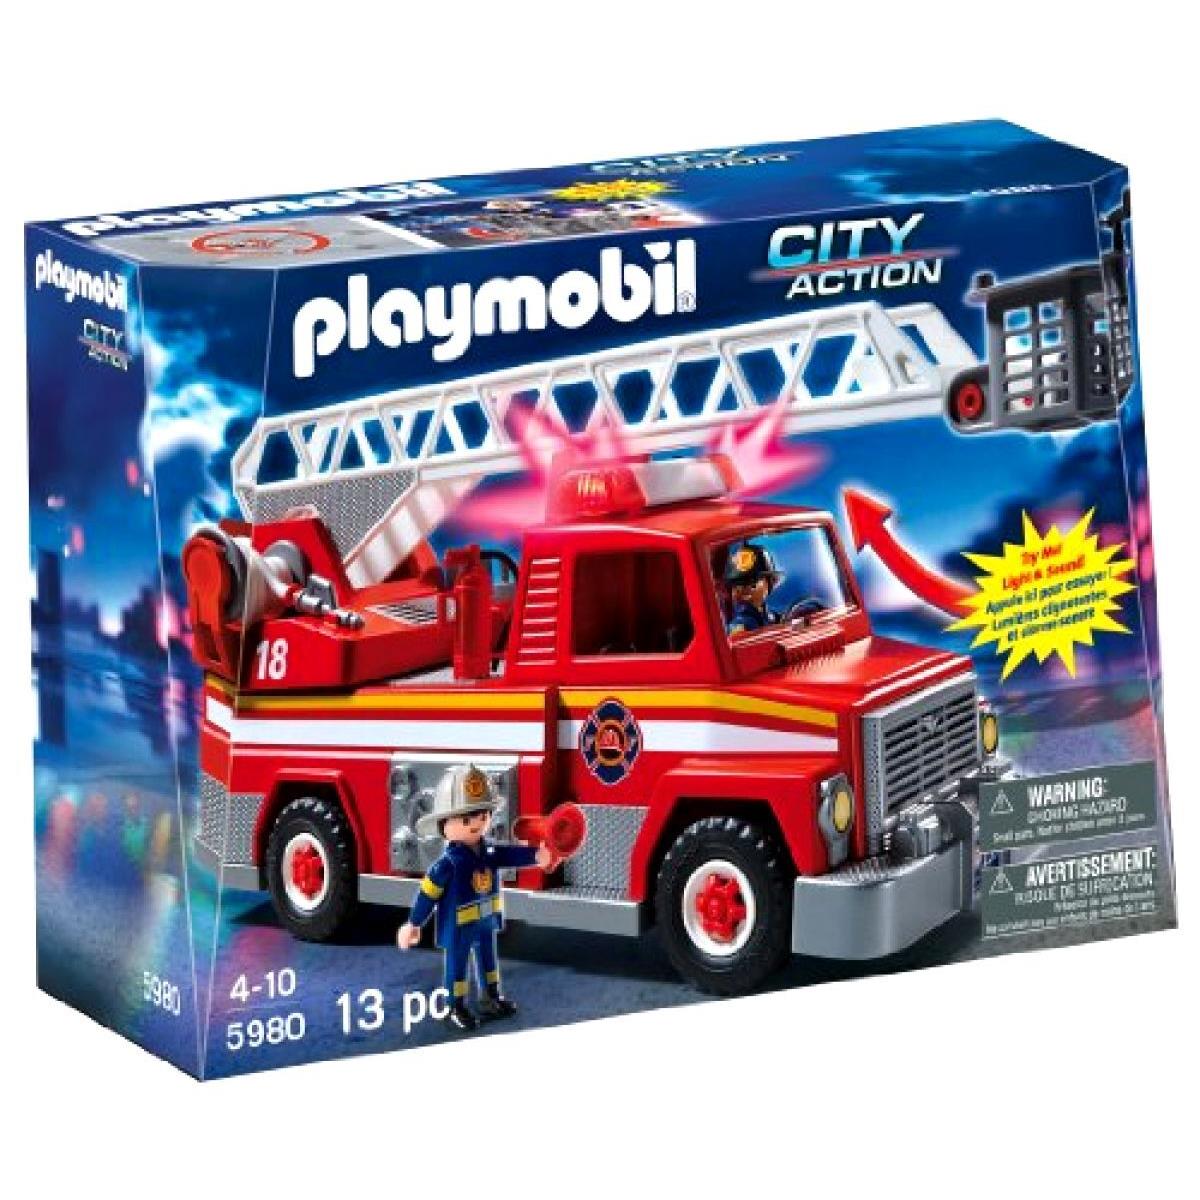 Firetruck Car Toy Playmobil Rescue Ladder Unit Figures Kids City Action